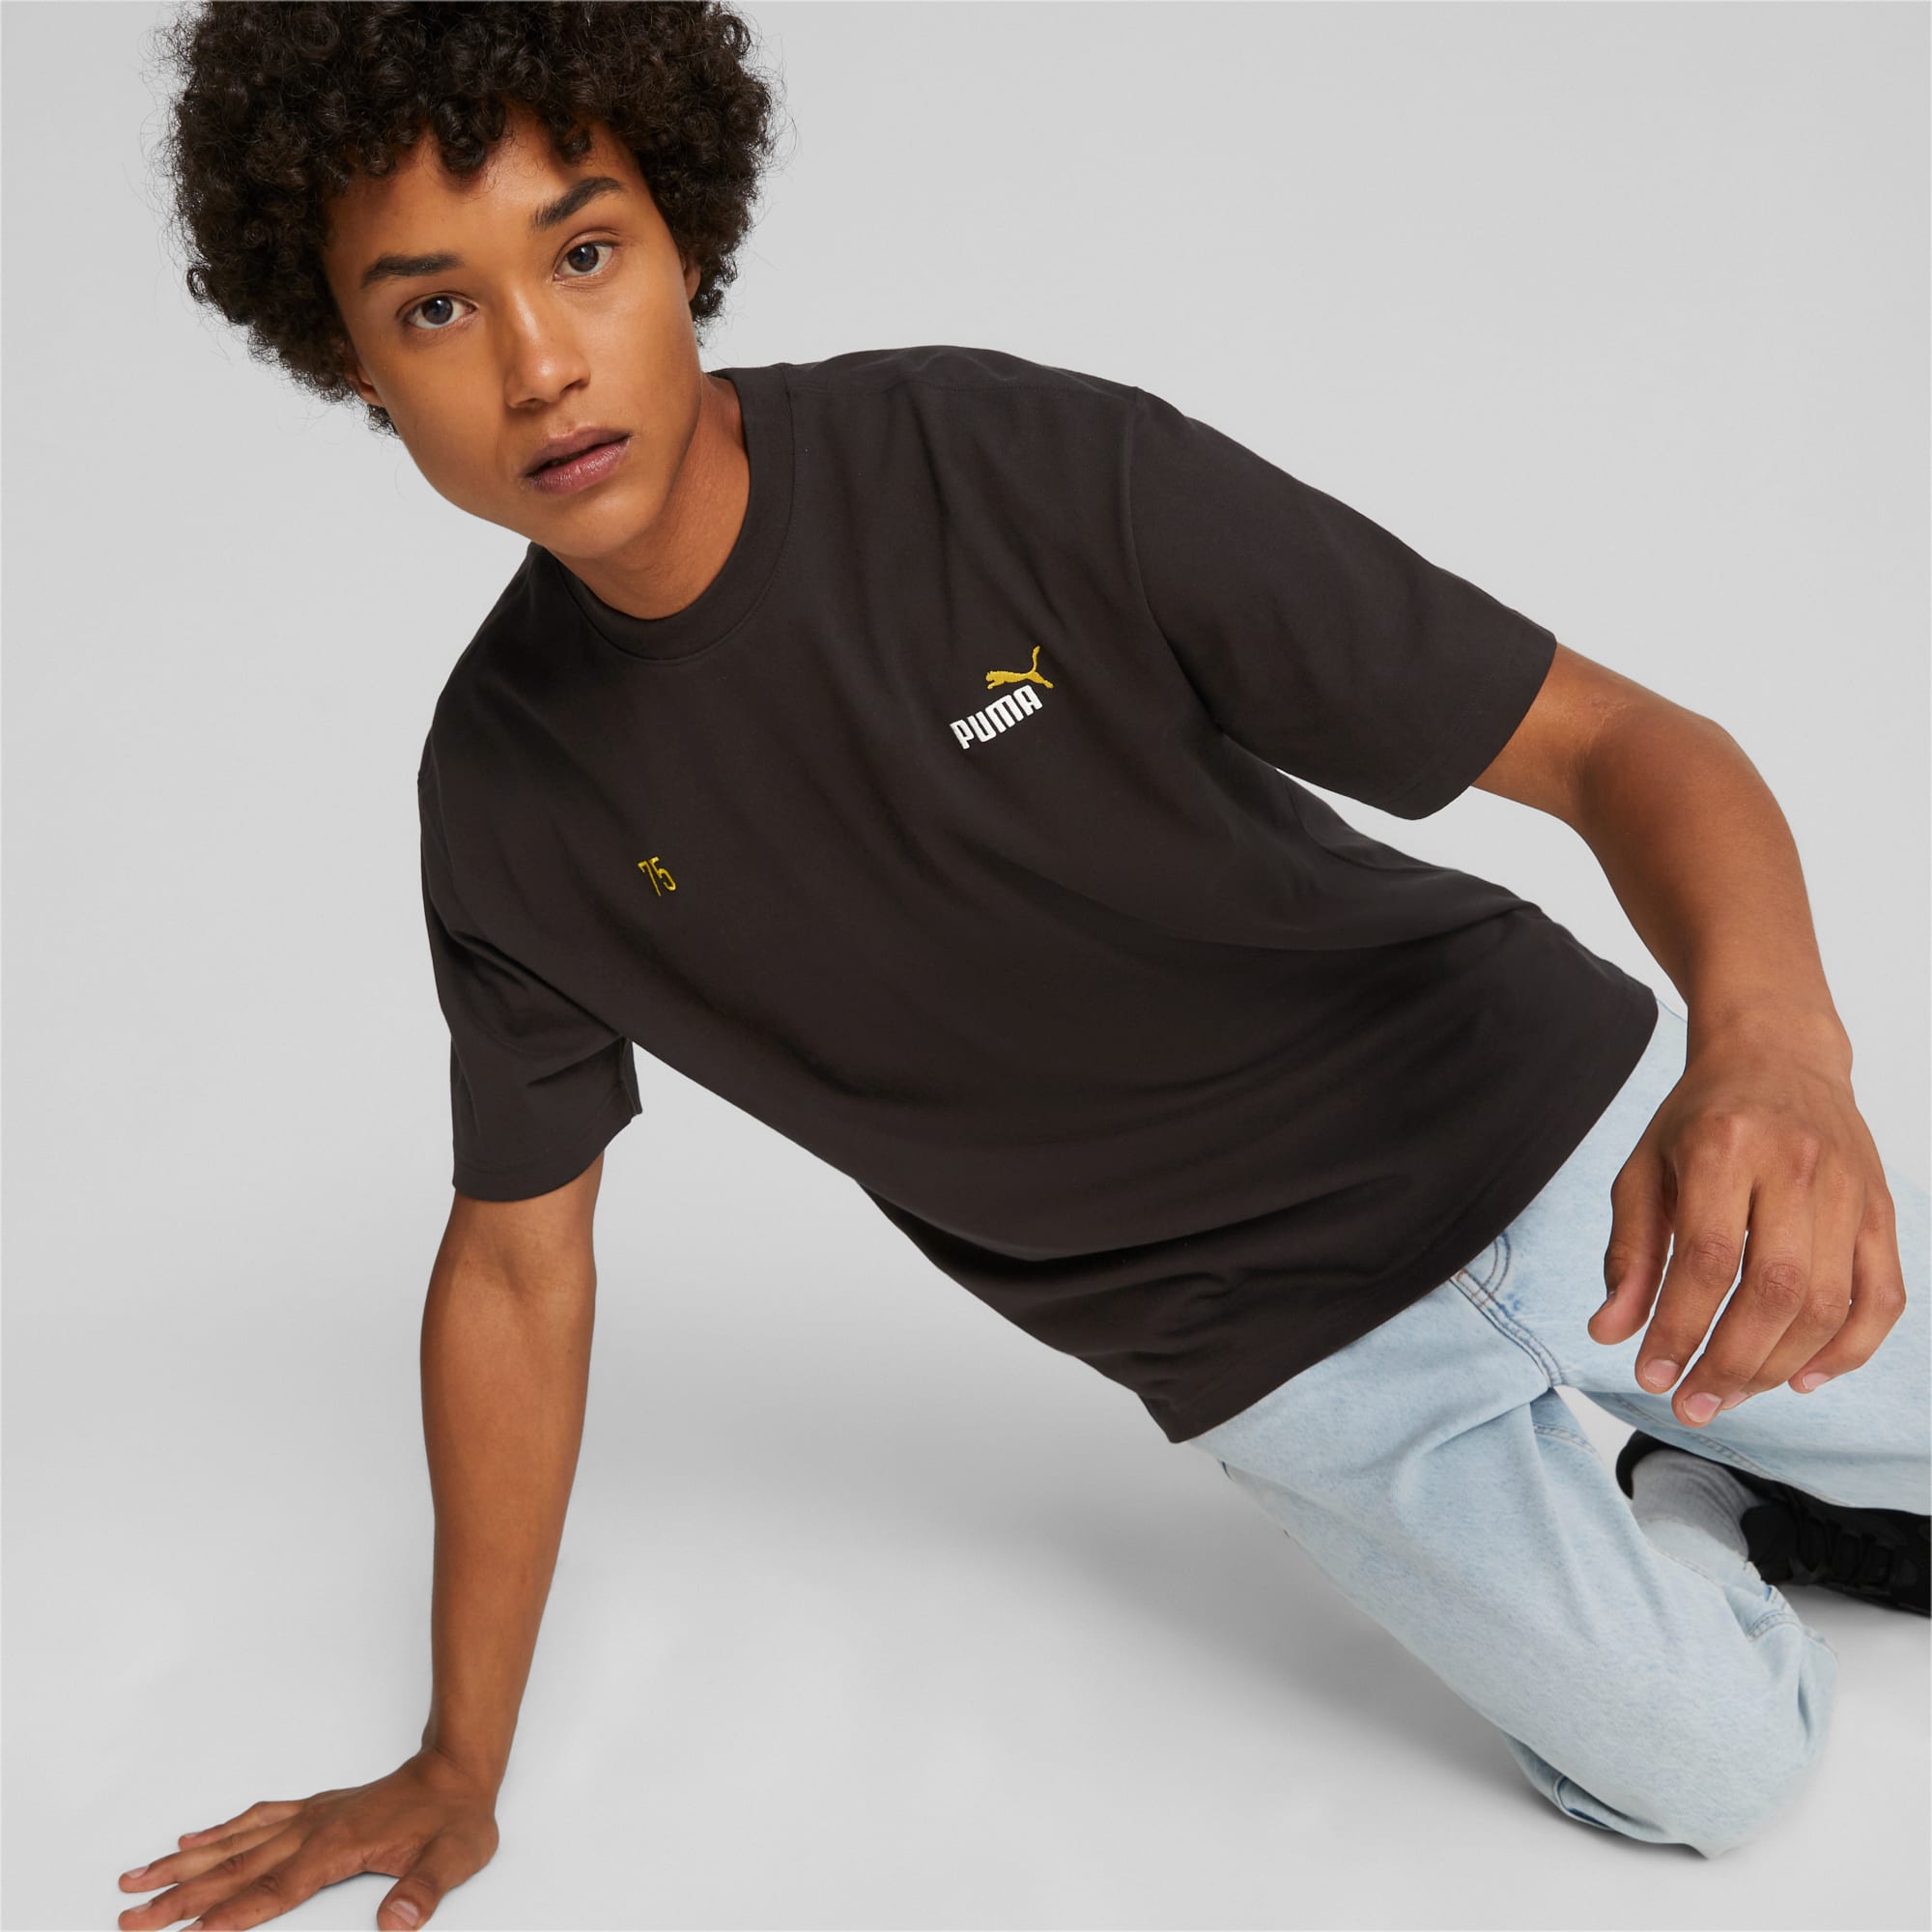 Puma Essentials No. 1 Logo Men's T-Shirt, Black, S